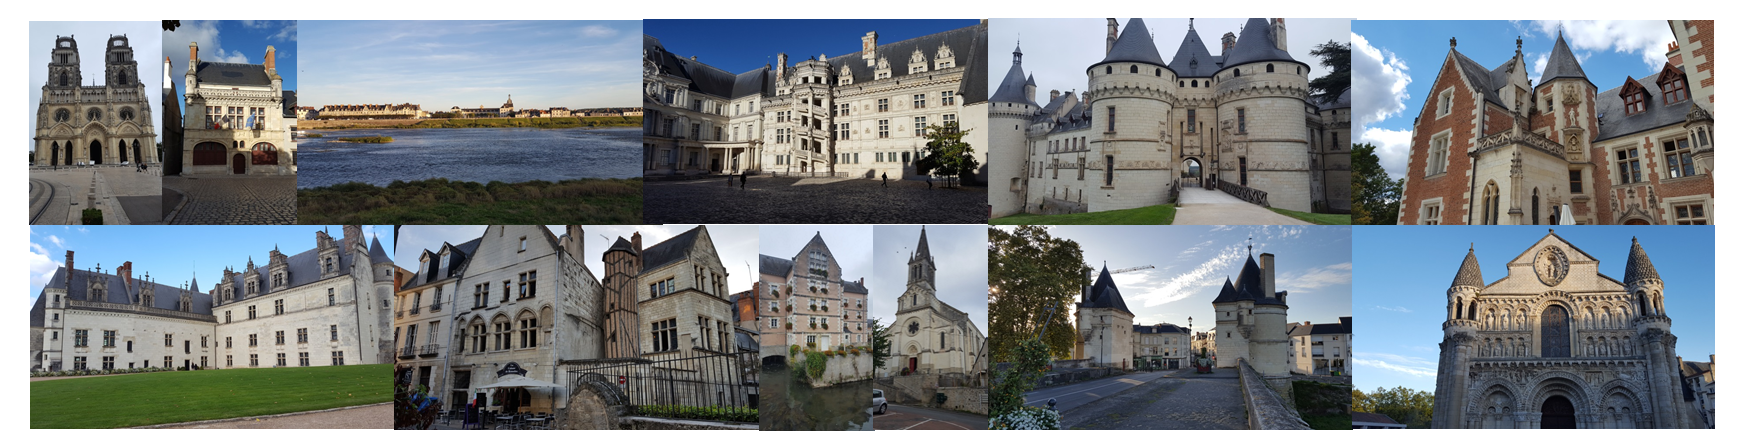 Orléans, Beaugency, Blois, Chaumont, Amboise, Tours, Ste Maure, Chatellerault, Poitiers